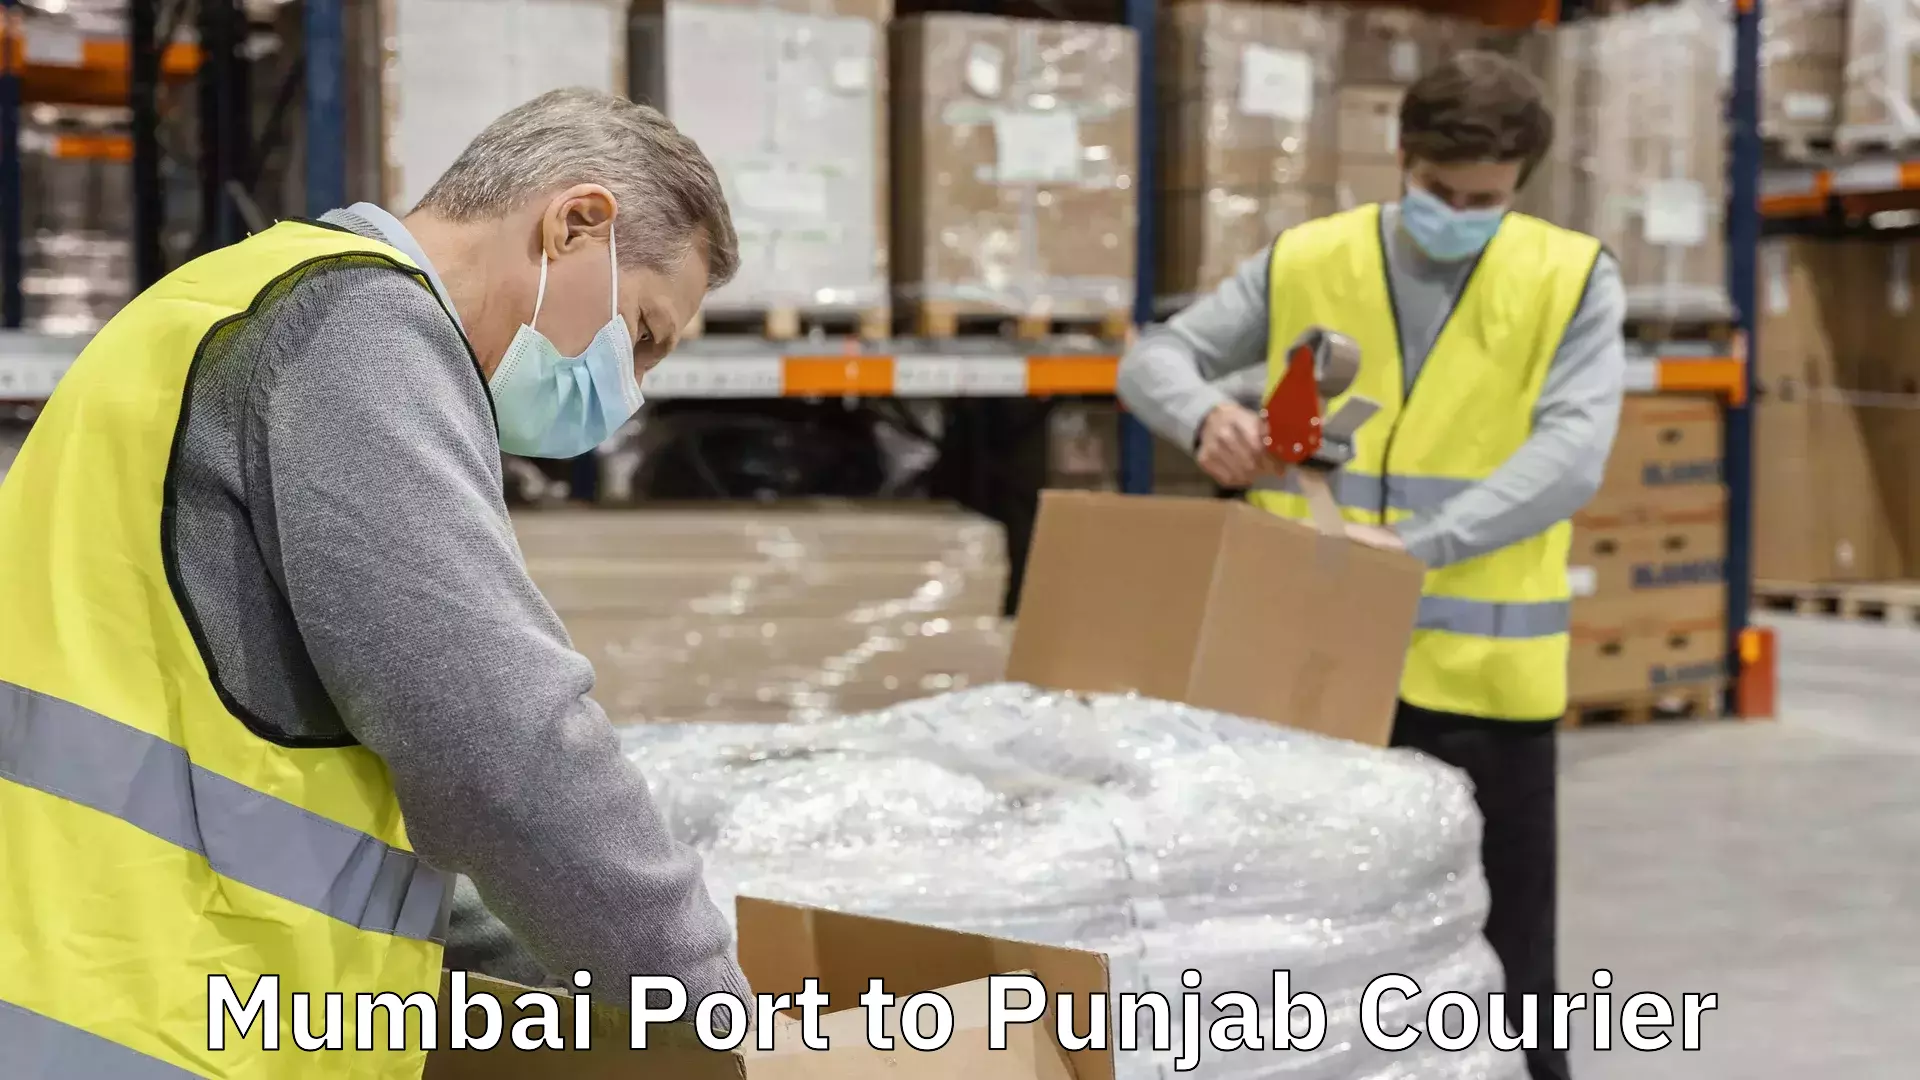 Bulk courier orders Mumbai Port to Punjab